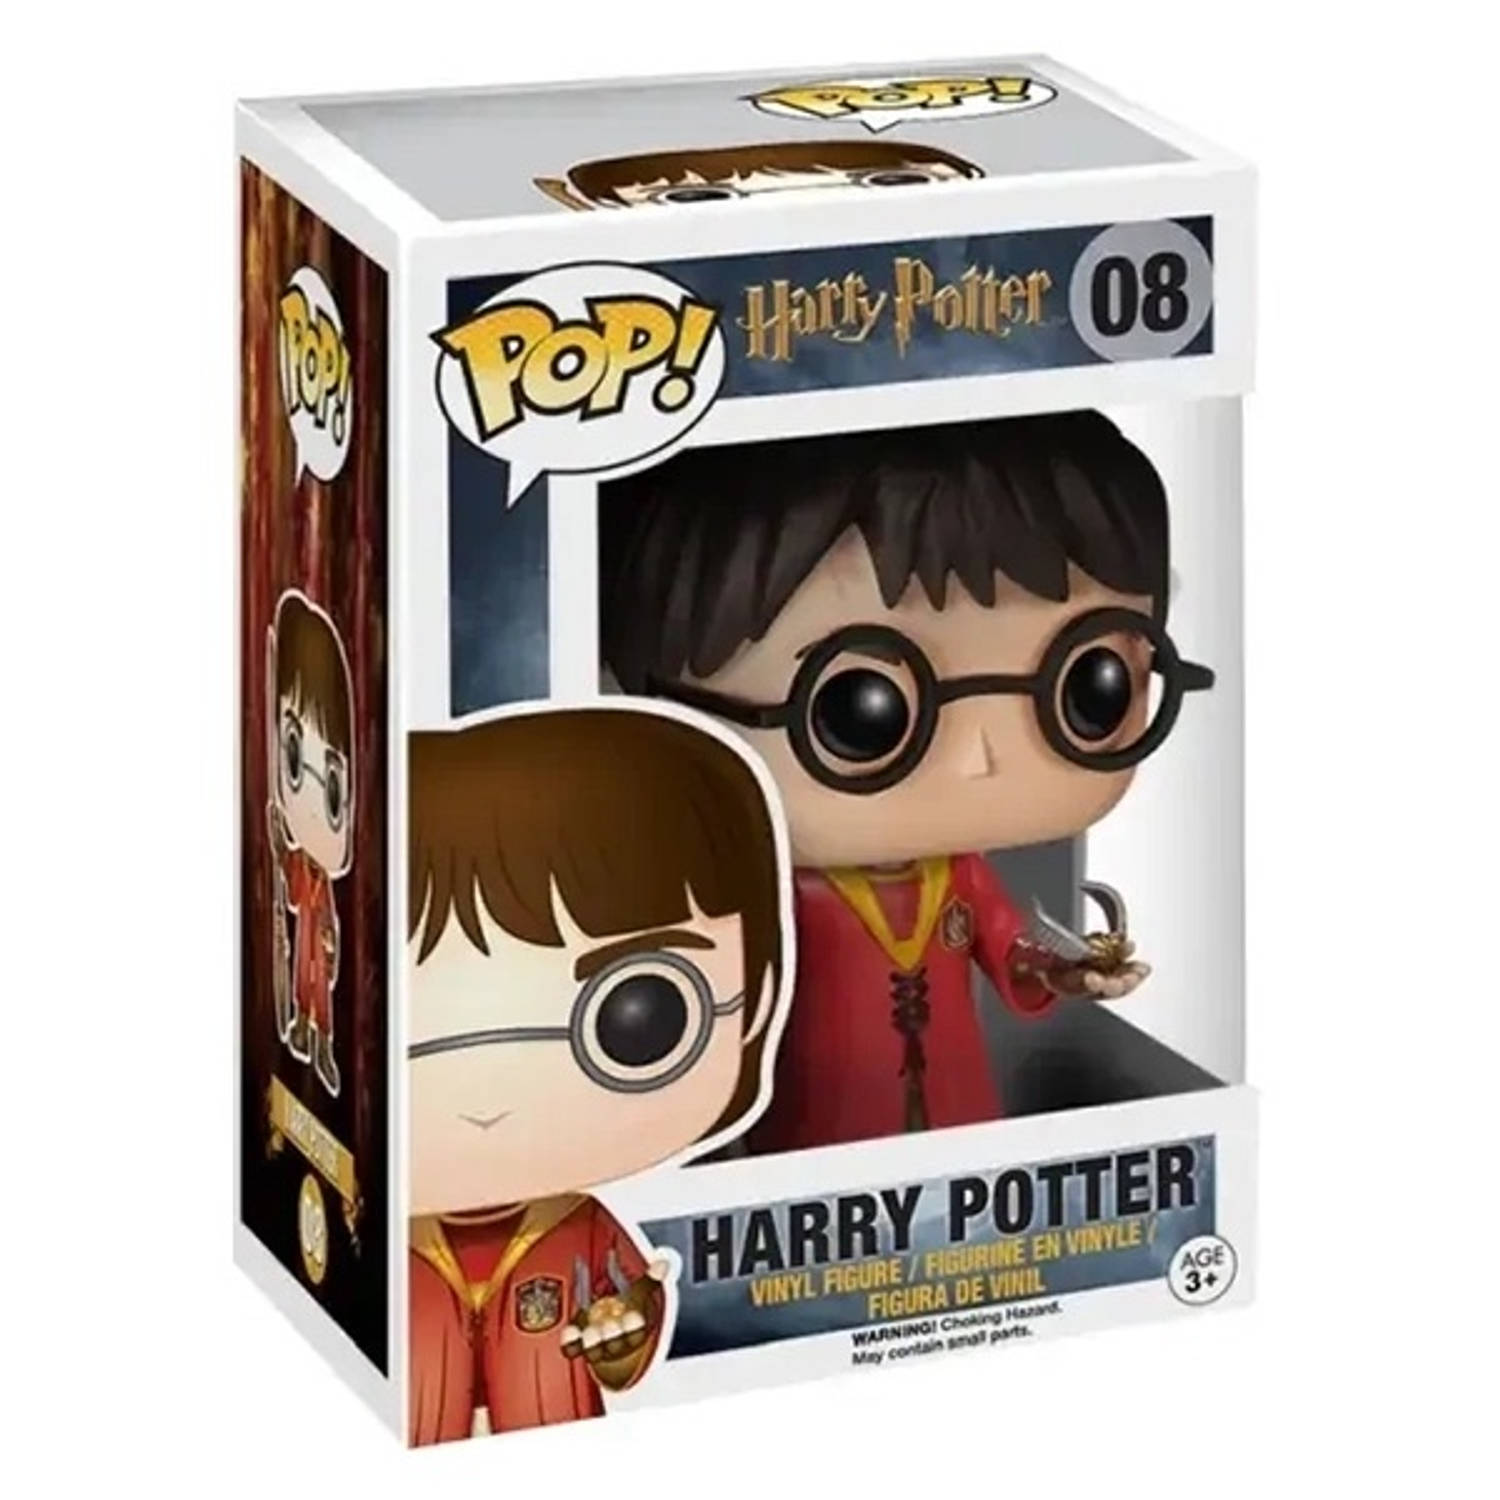 Harry Potter Quidditch Limited Edition Pop! Vinyl Figure